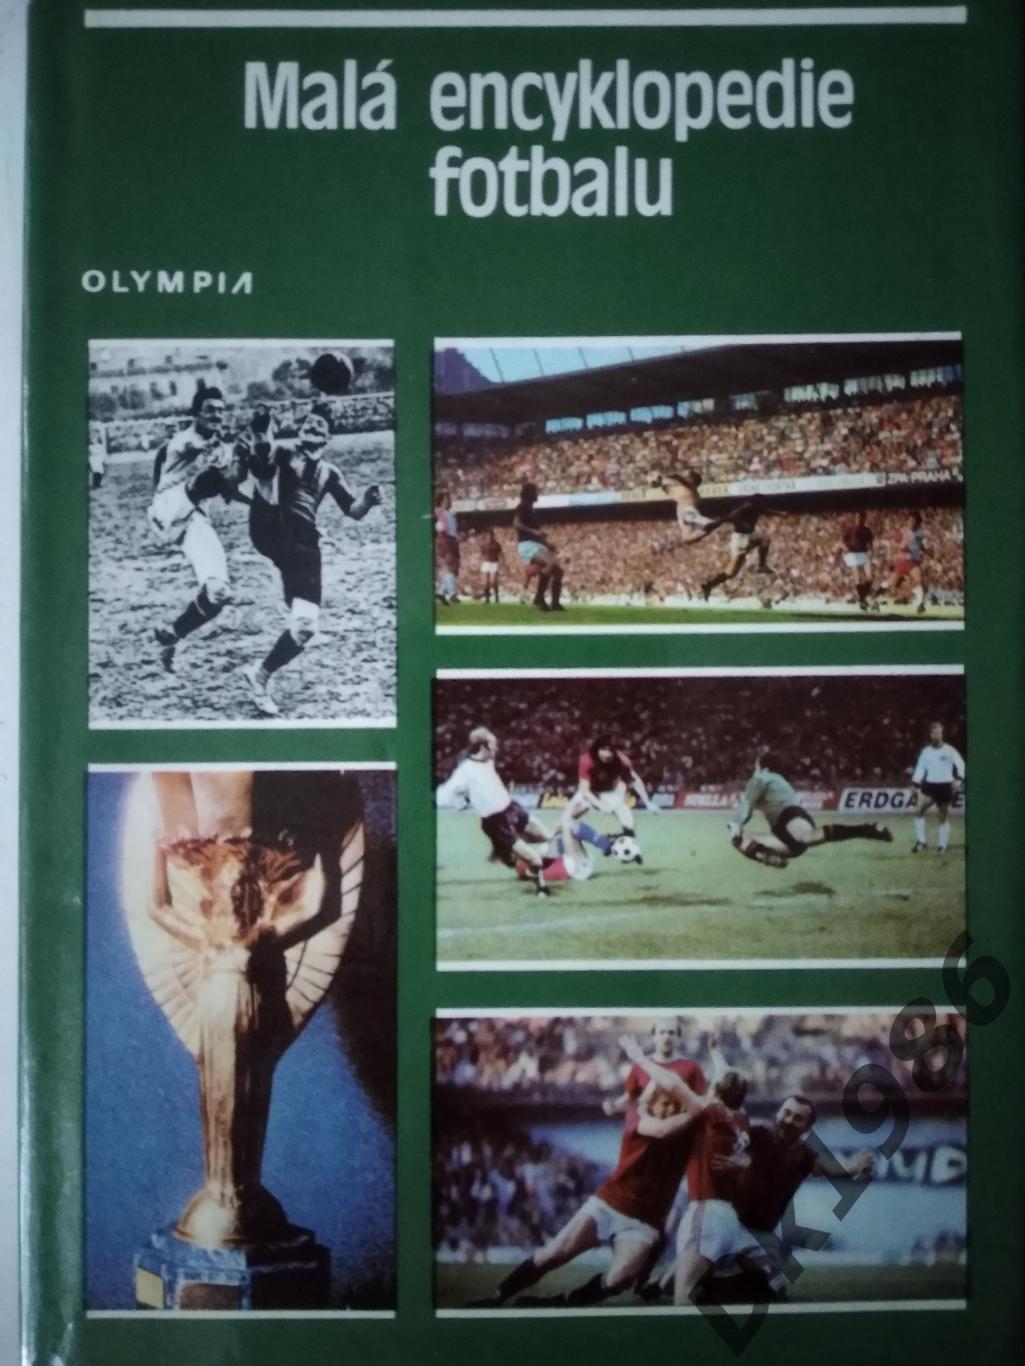 Мала енциклопедія футболу, Прага 1984 рік